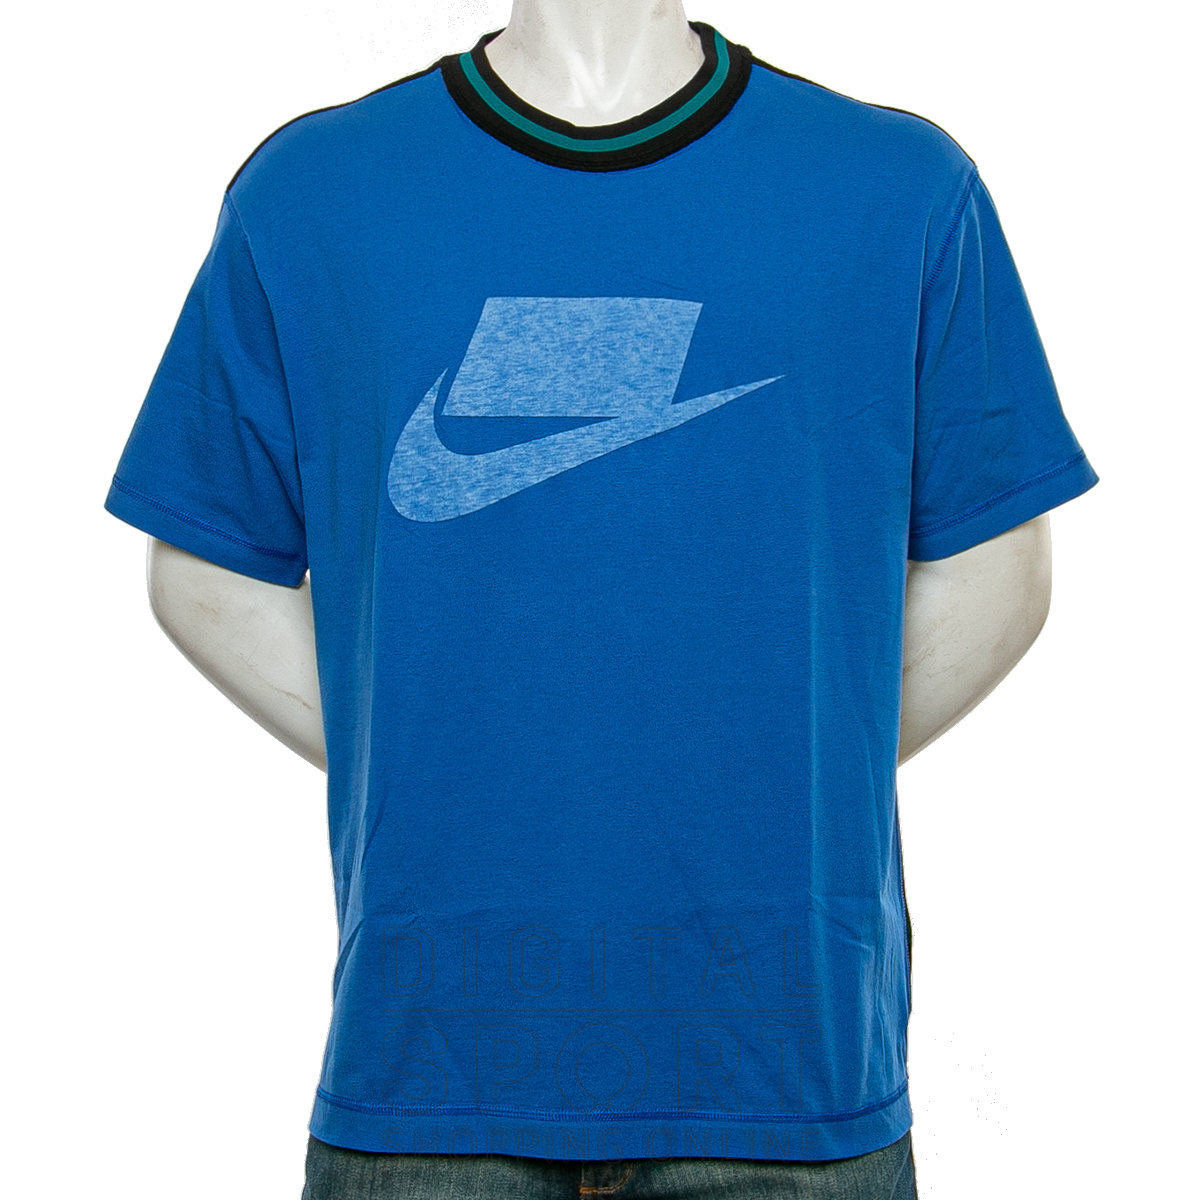 رحمه الله متعمد مماثل camiseta nike sportswear plaid azul - nmpsaoluis.com